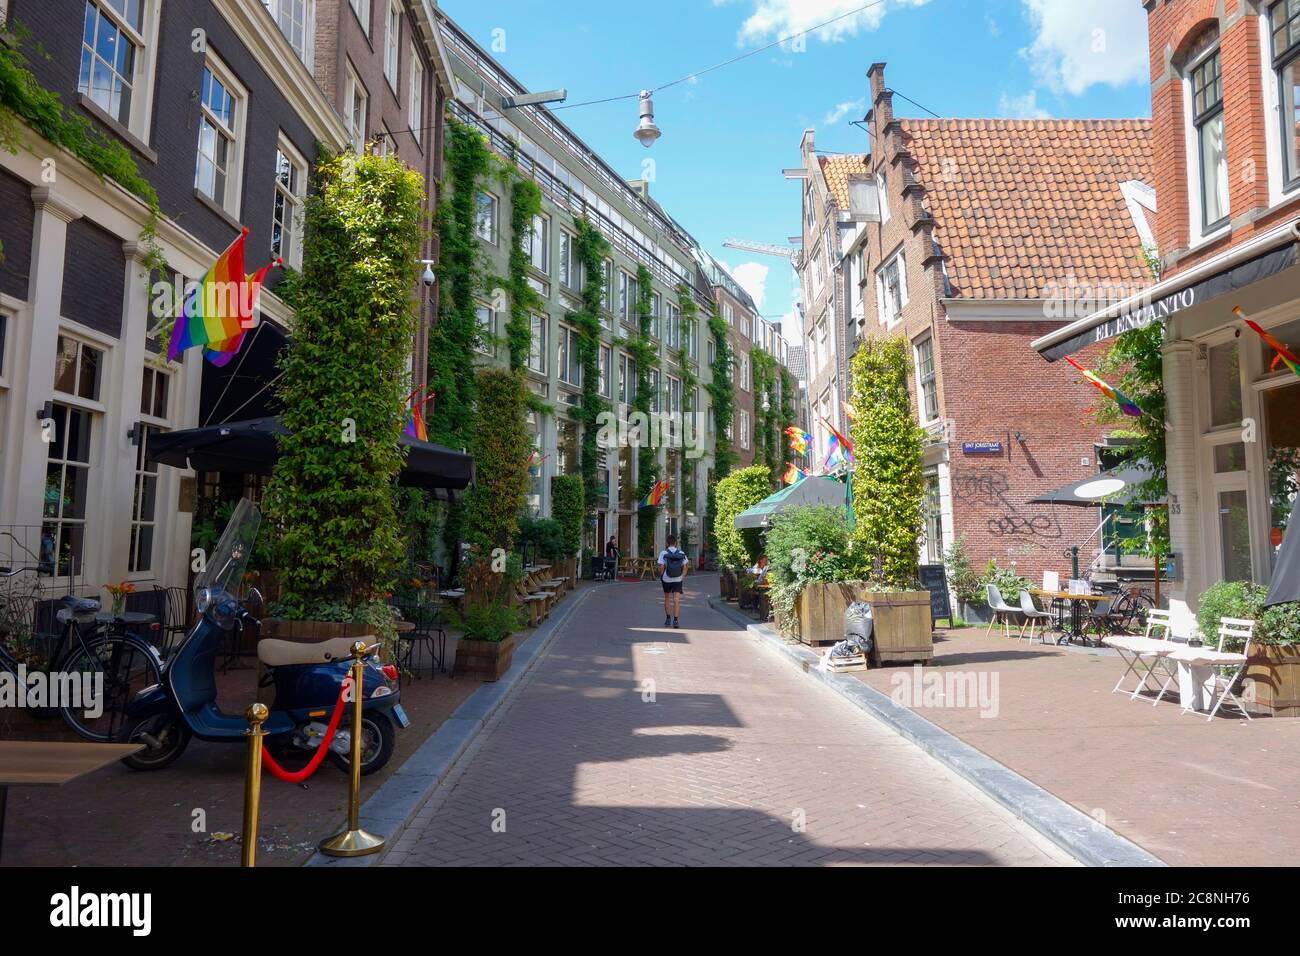 Reguliersdwarsstraat, - die berühmteste, trendy und bunte Homosexuell Straße in Amsterdam, Niederlande. Stockfoto